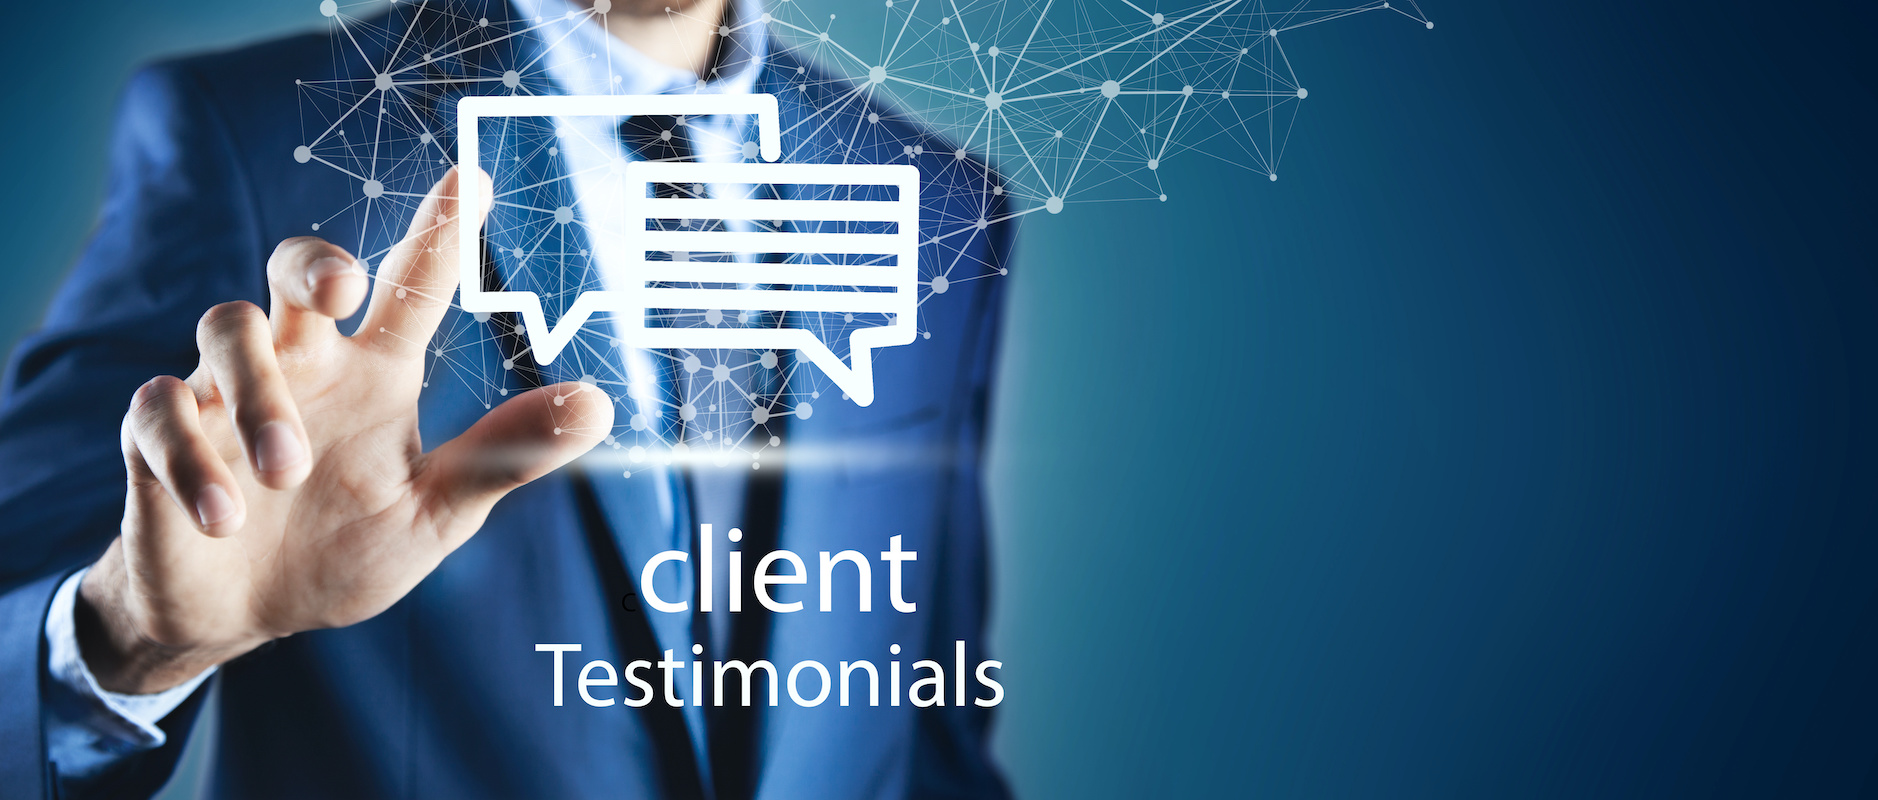 client testimonials for financial advisors